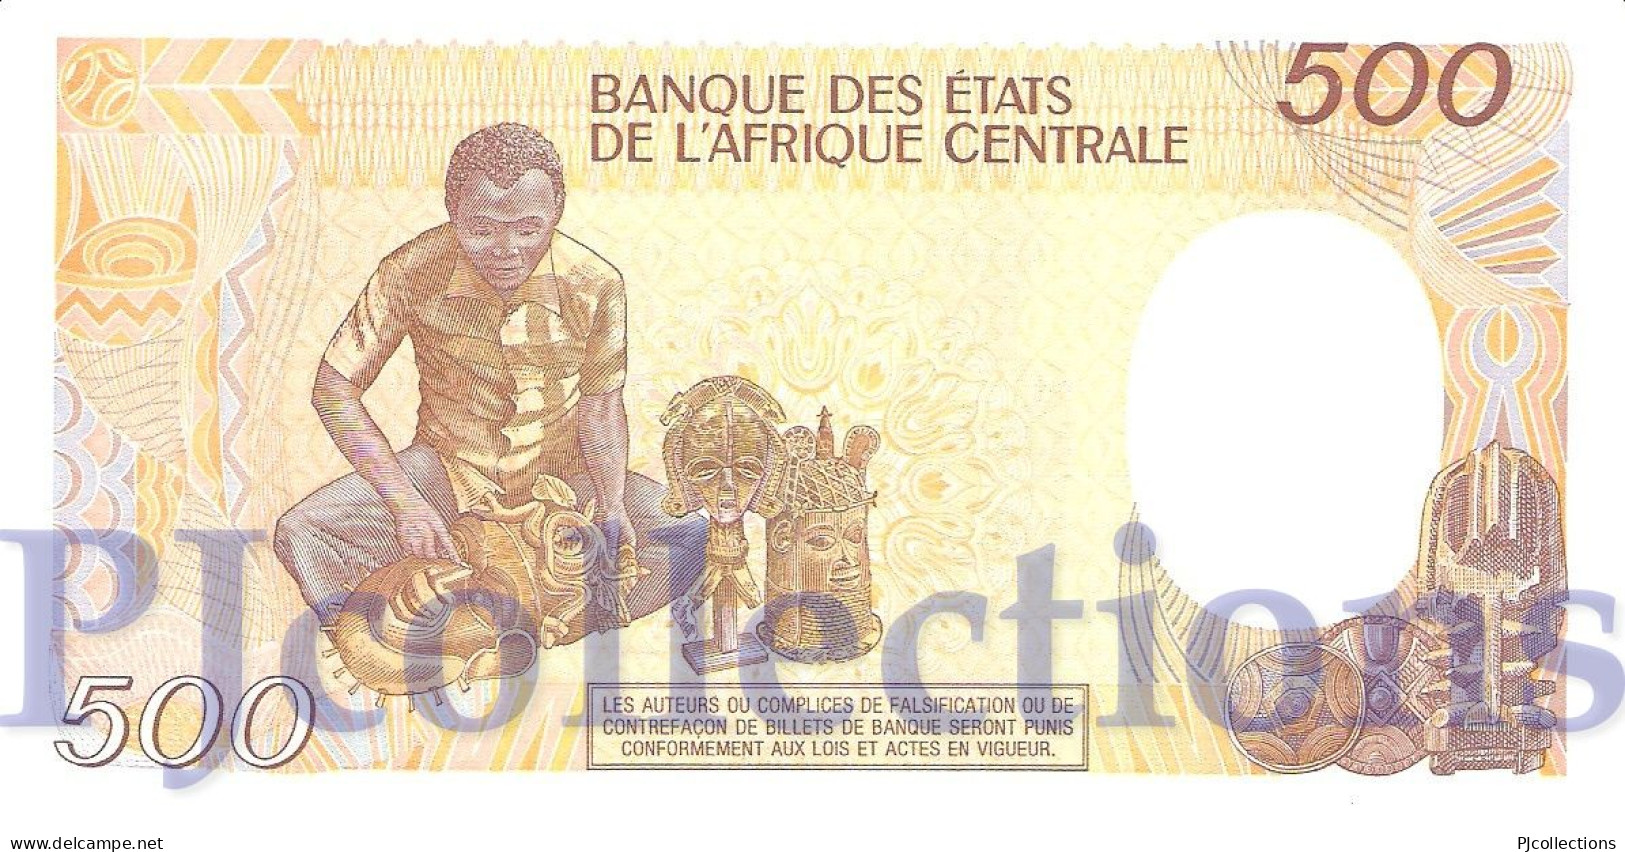 CONGO REPUBLIC 500 FRANCS 1990 PICK 8c UNC - Republic Of Congo (Congo-Brazzaville)